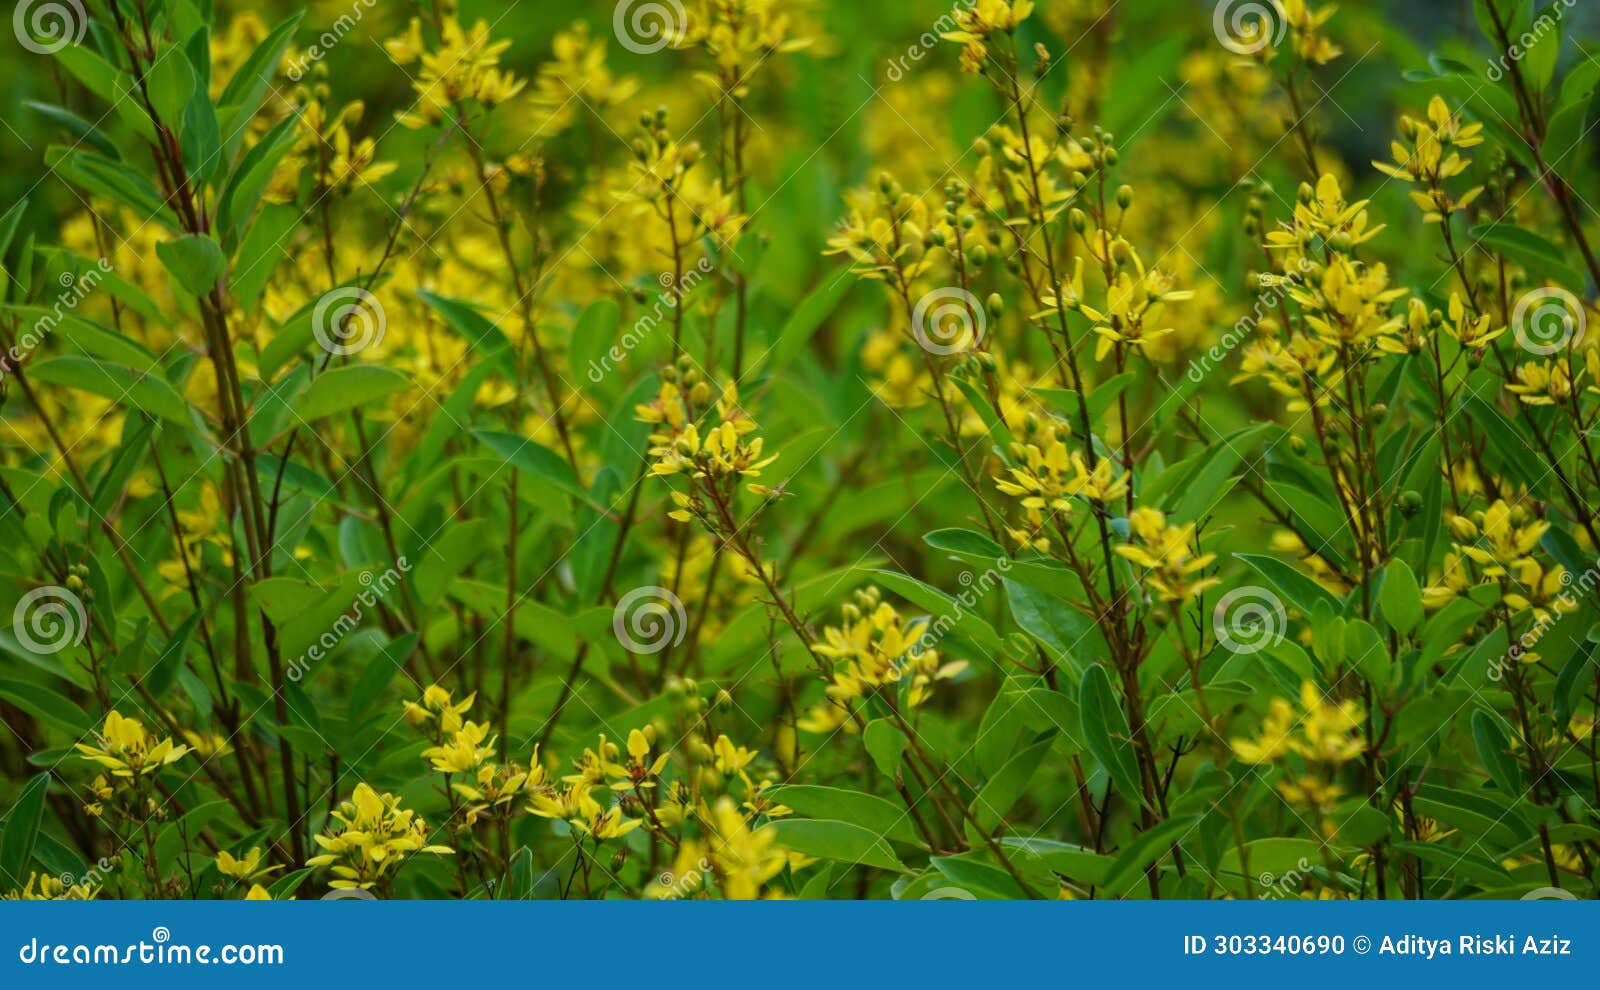 galphimia glauca (also called hujan mas, noche buena, gold shower thryallis, noche buena, rain of gold) flower